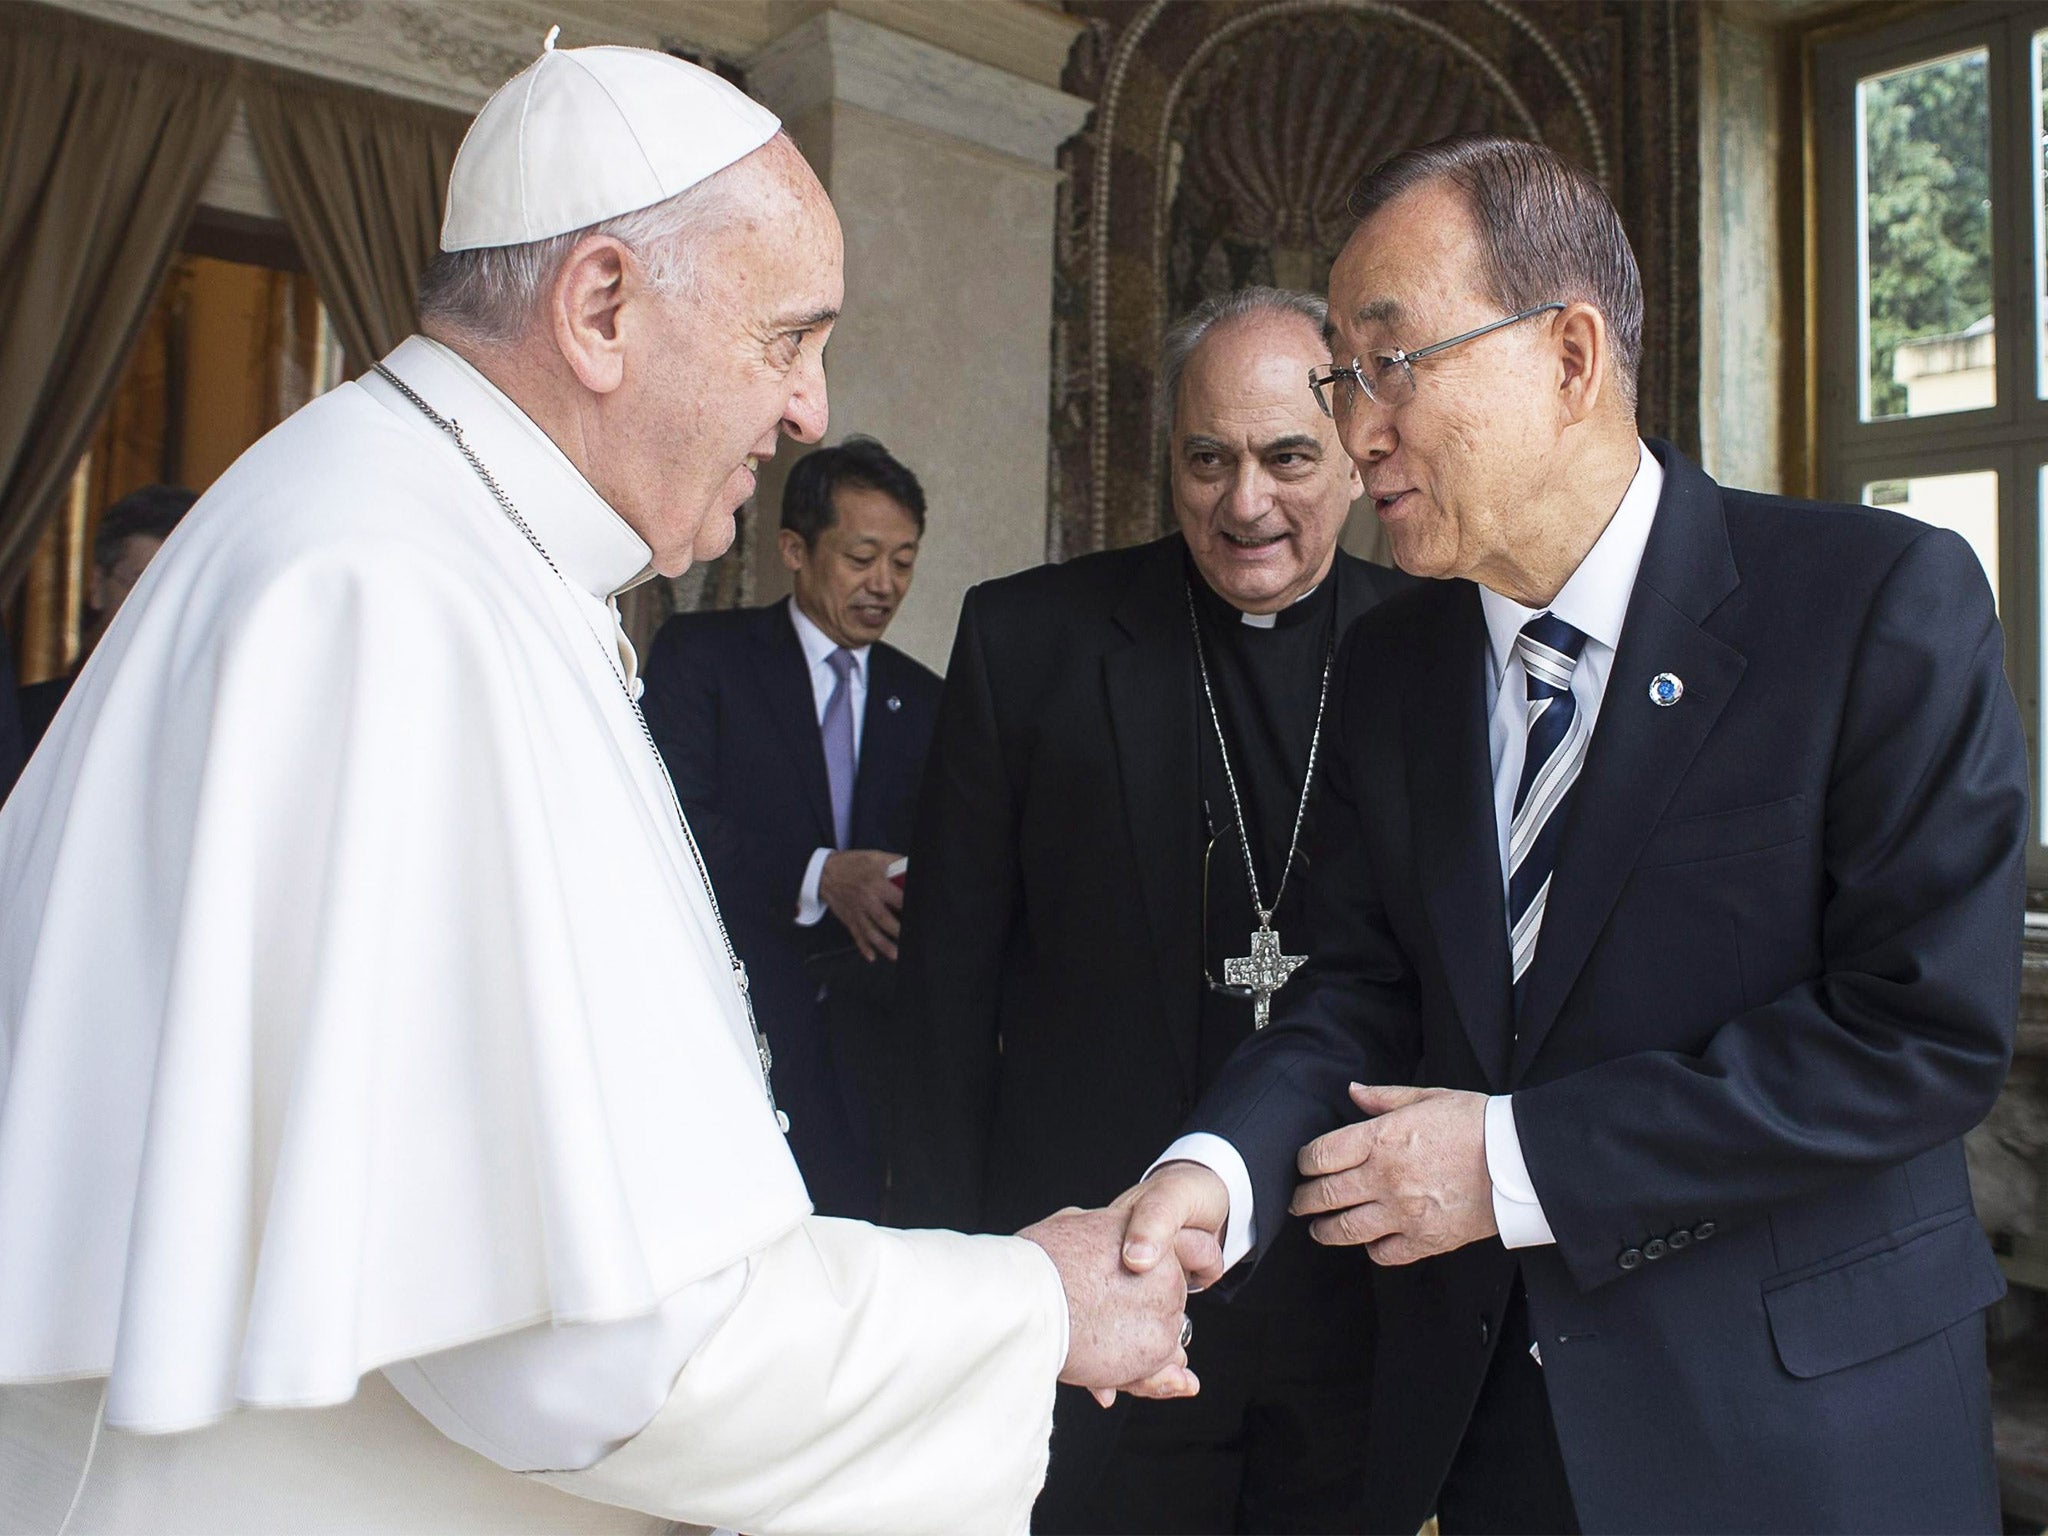 Pope Francis greets UN Secretary-General Ban Ki-moon on Wednesday